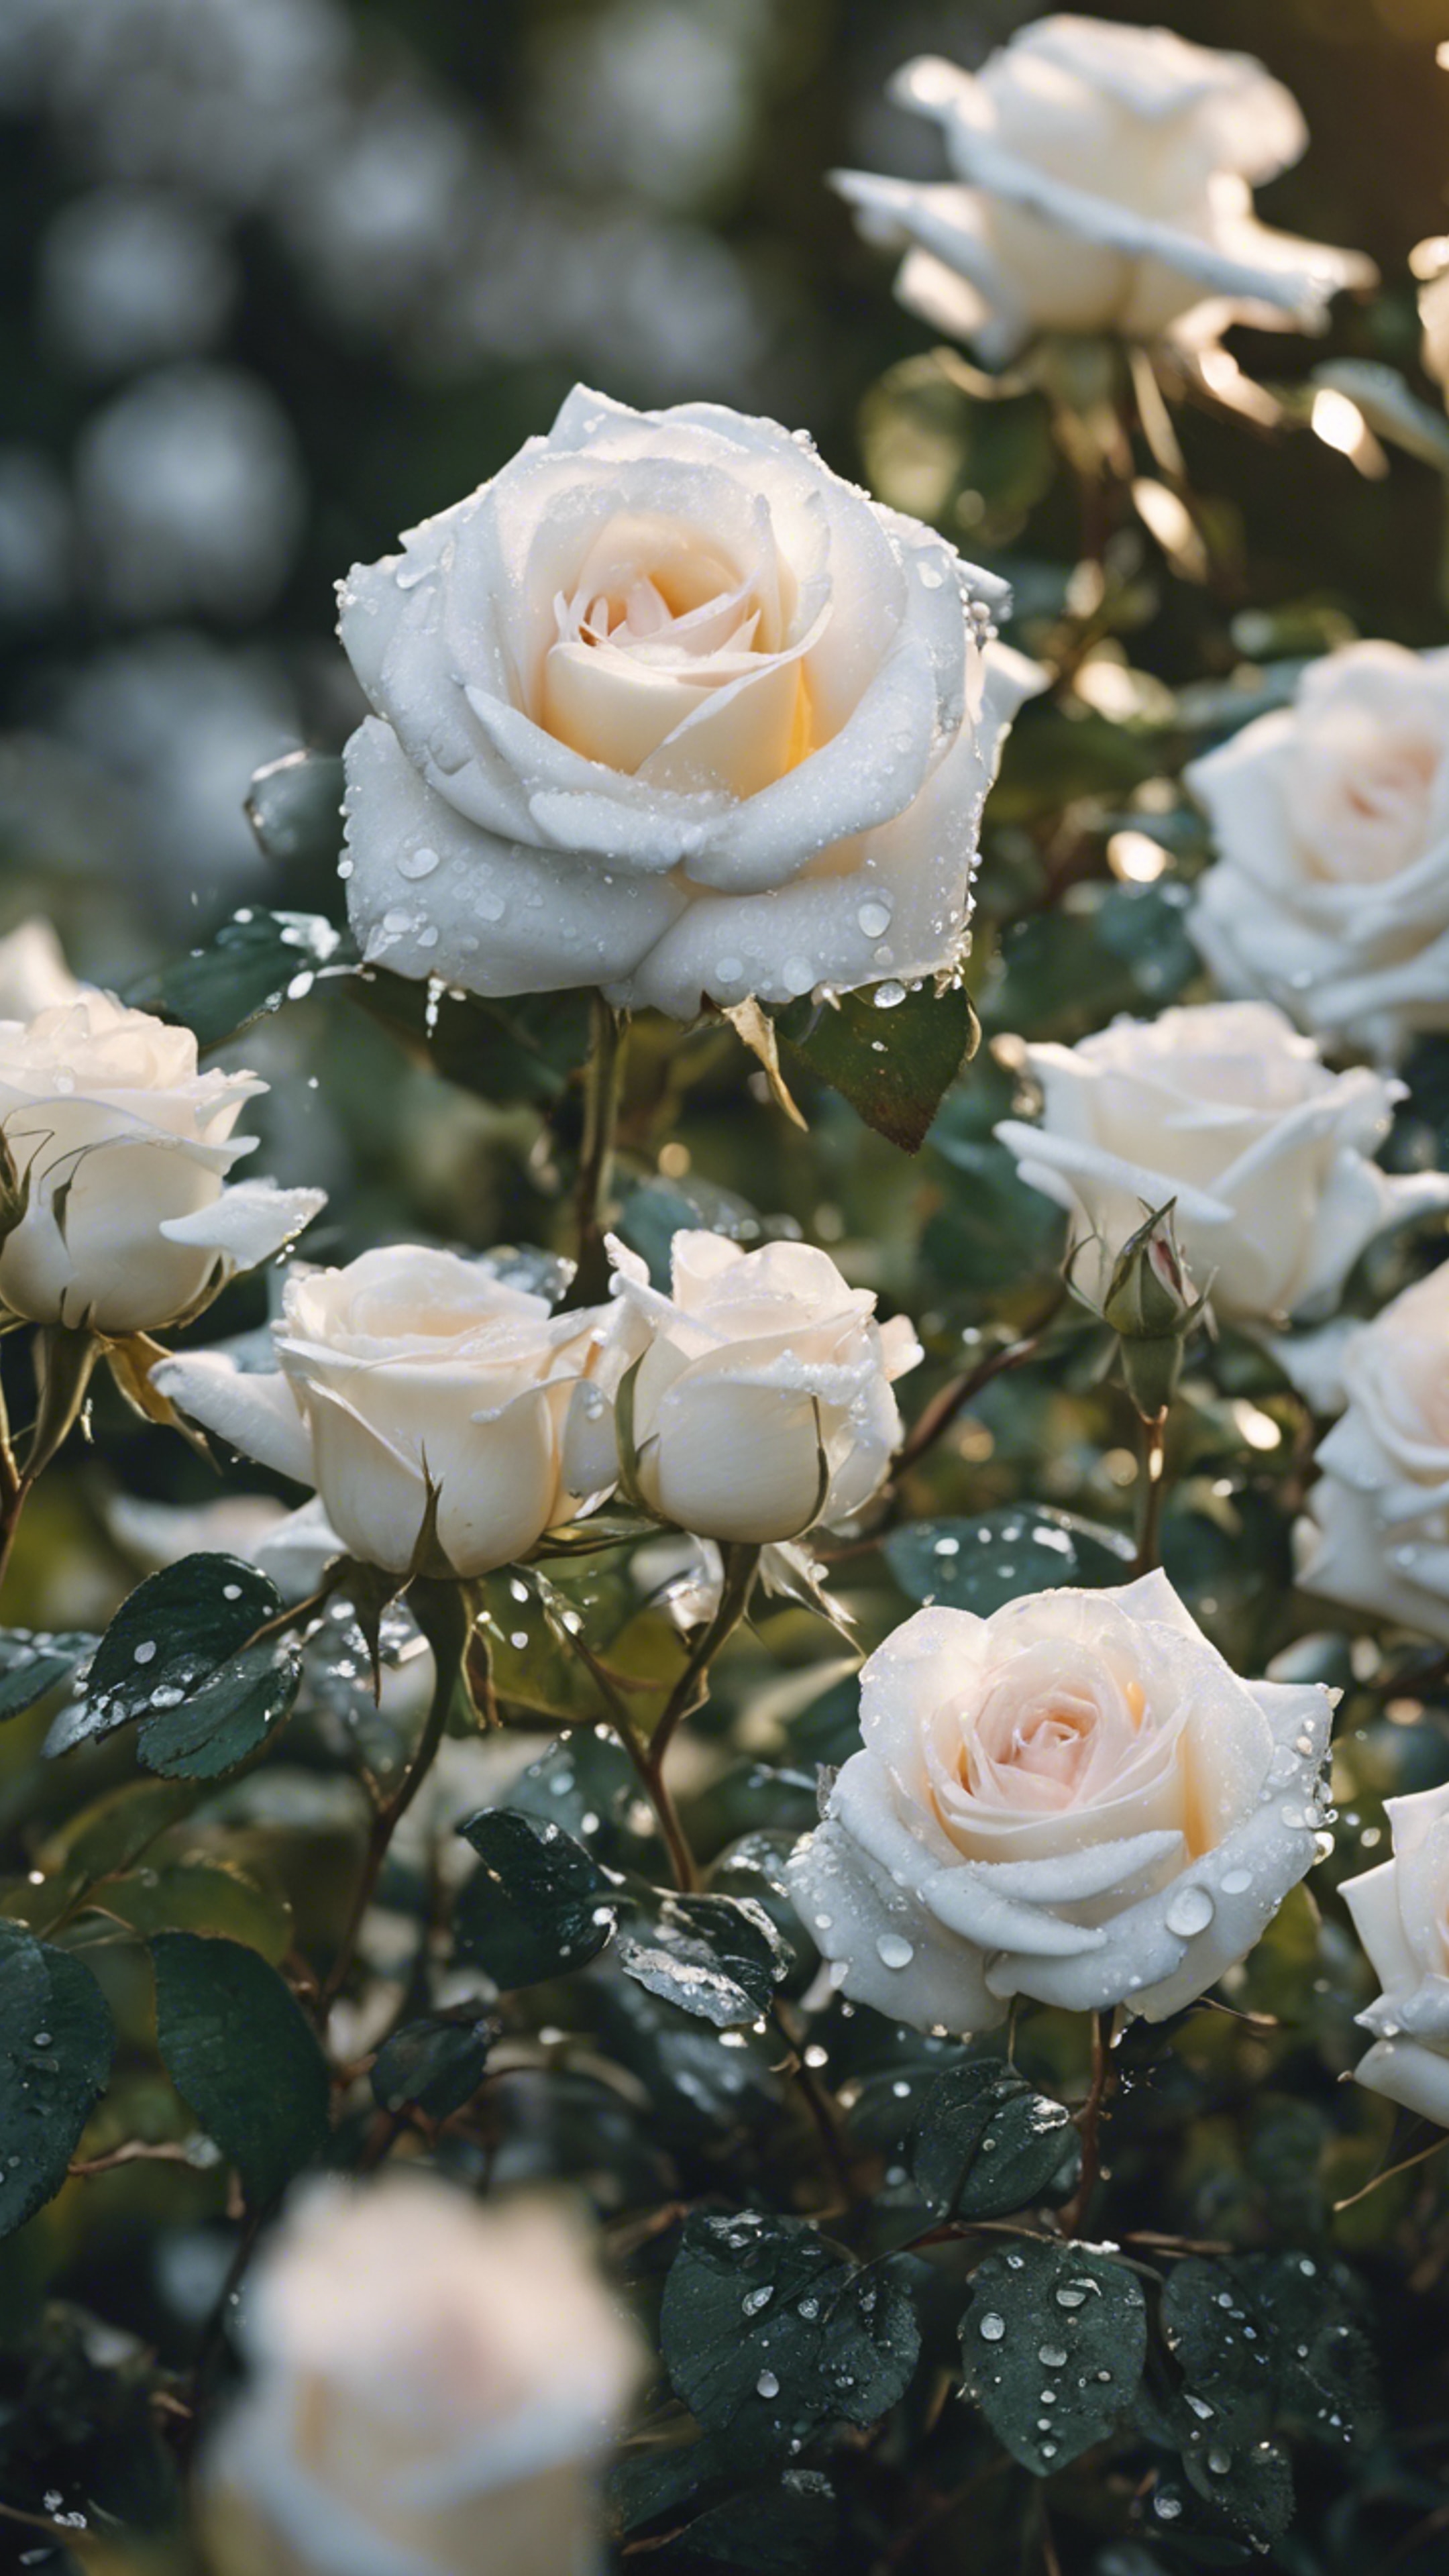 White roses covered in silver morning dew in a lush rose garden. duvar kağıdı[67c2c5bc62874412a2b6]